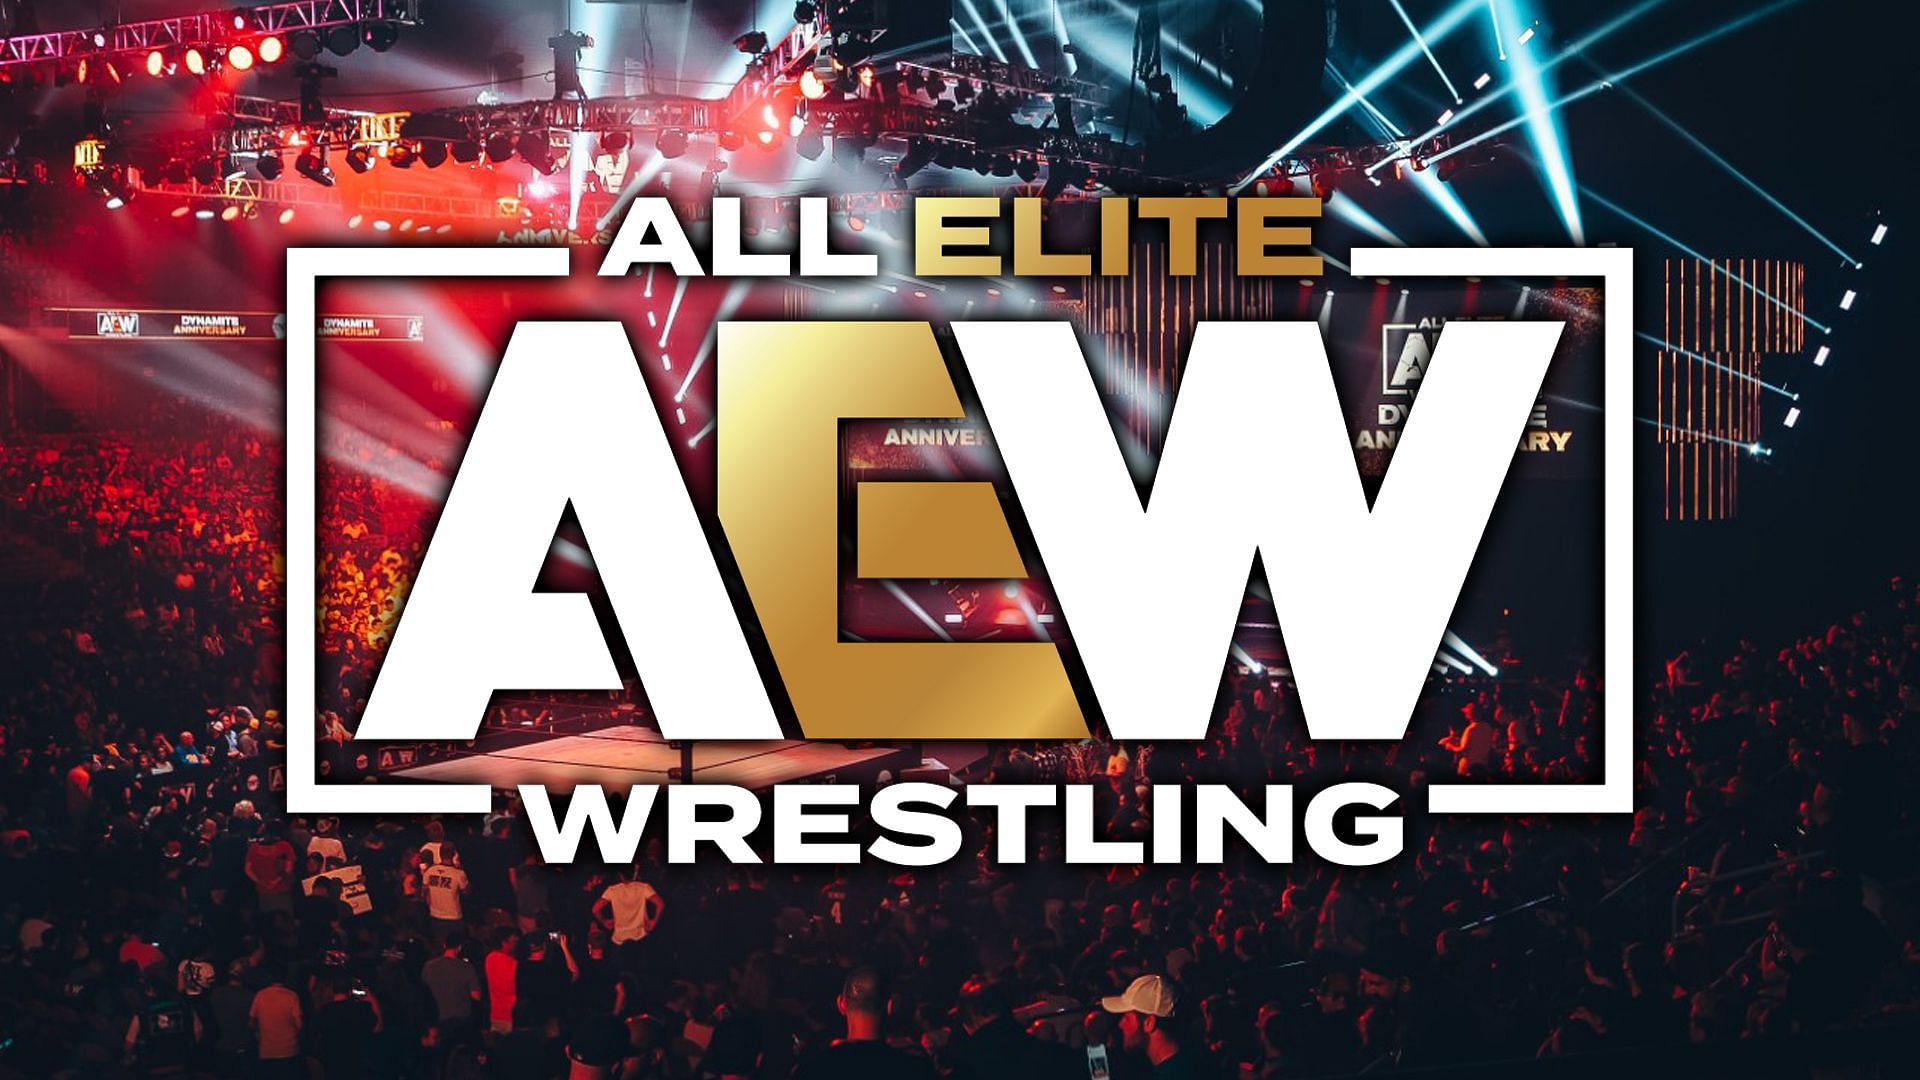 All Elite Wrestling is still suffering from sluggish ticket sales